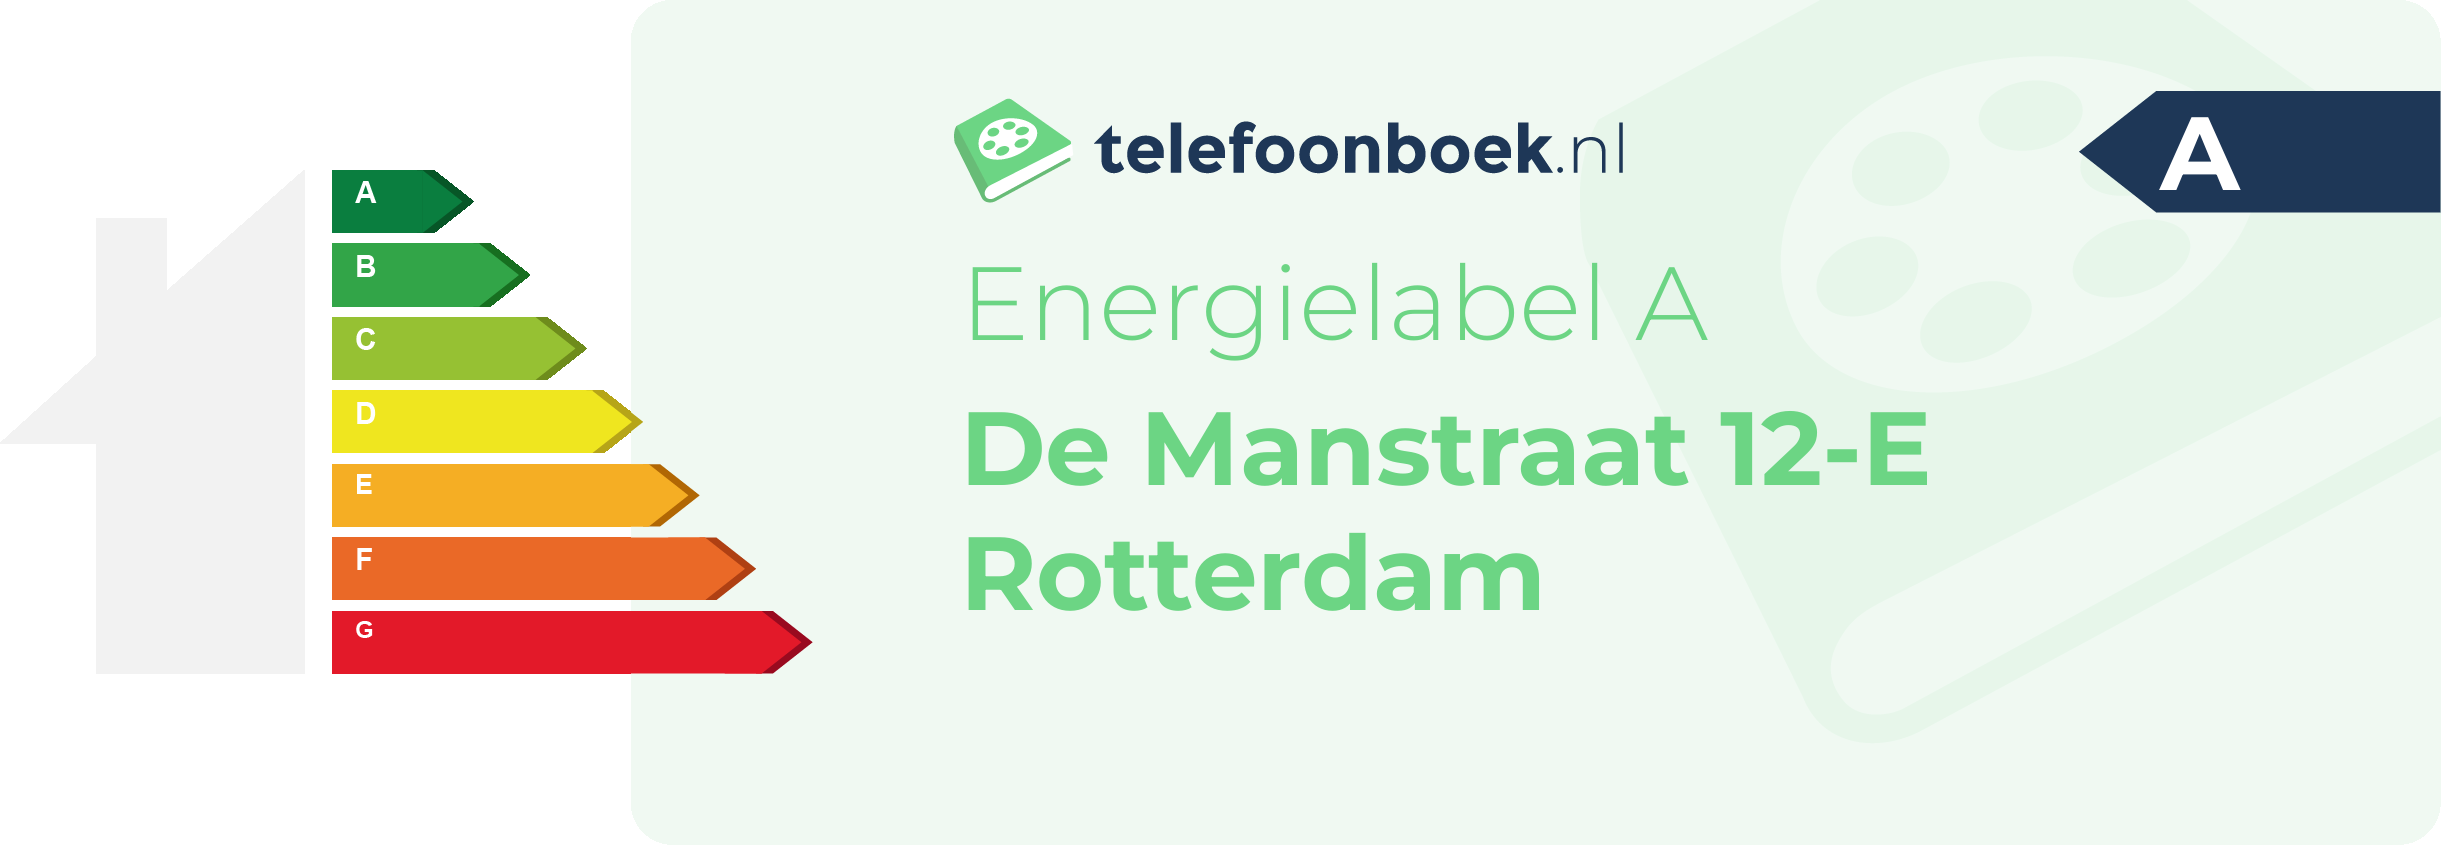 Energielabel De Manstraat 12-E Rotterdam